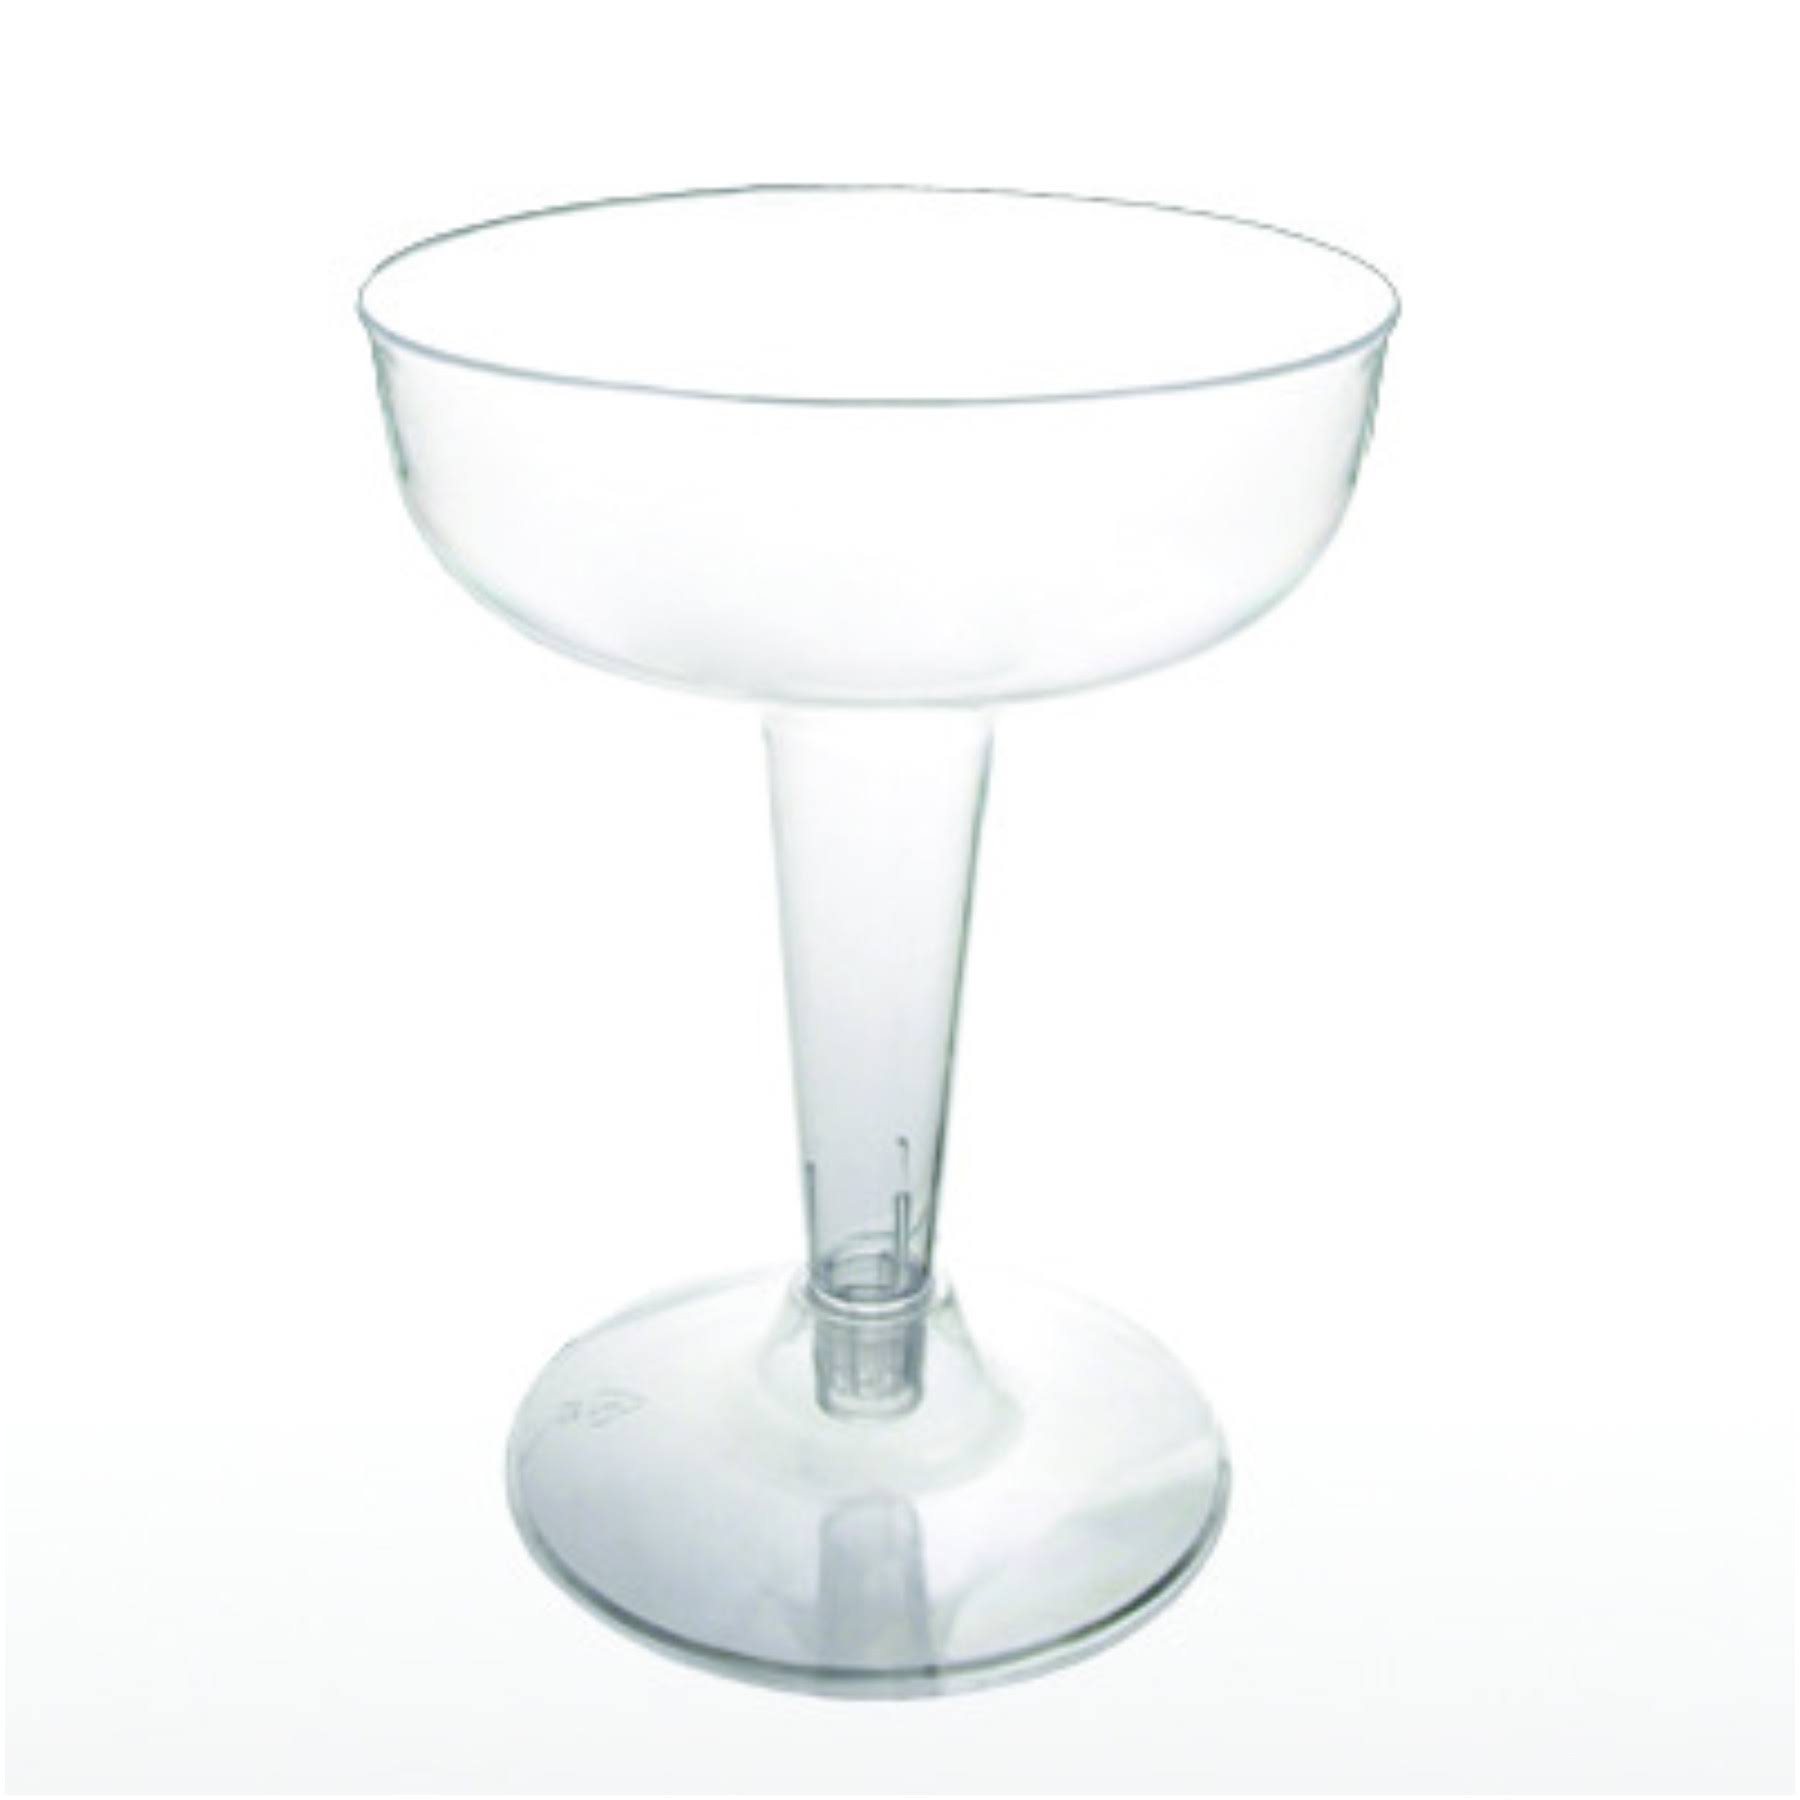 Northwest Enterprises Plastic Champagne Glasses - 20ct, 4oz, Clear